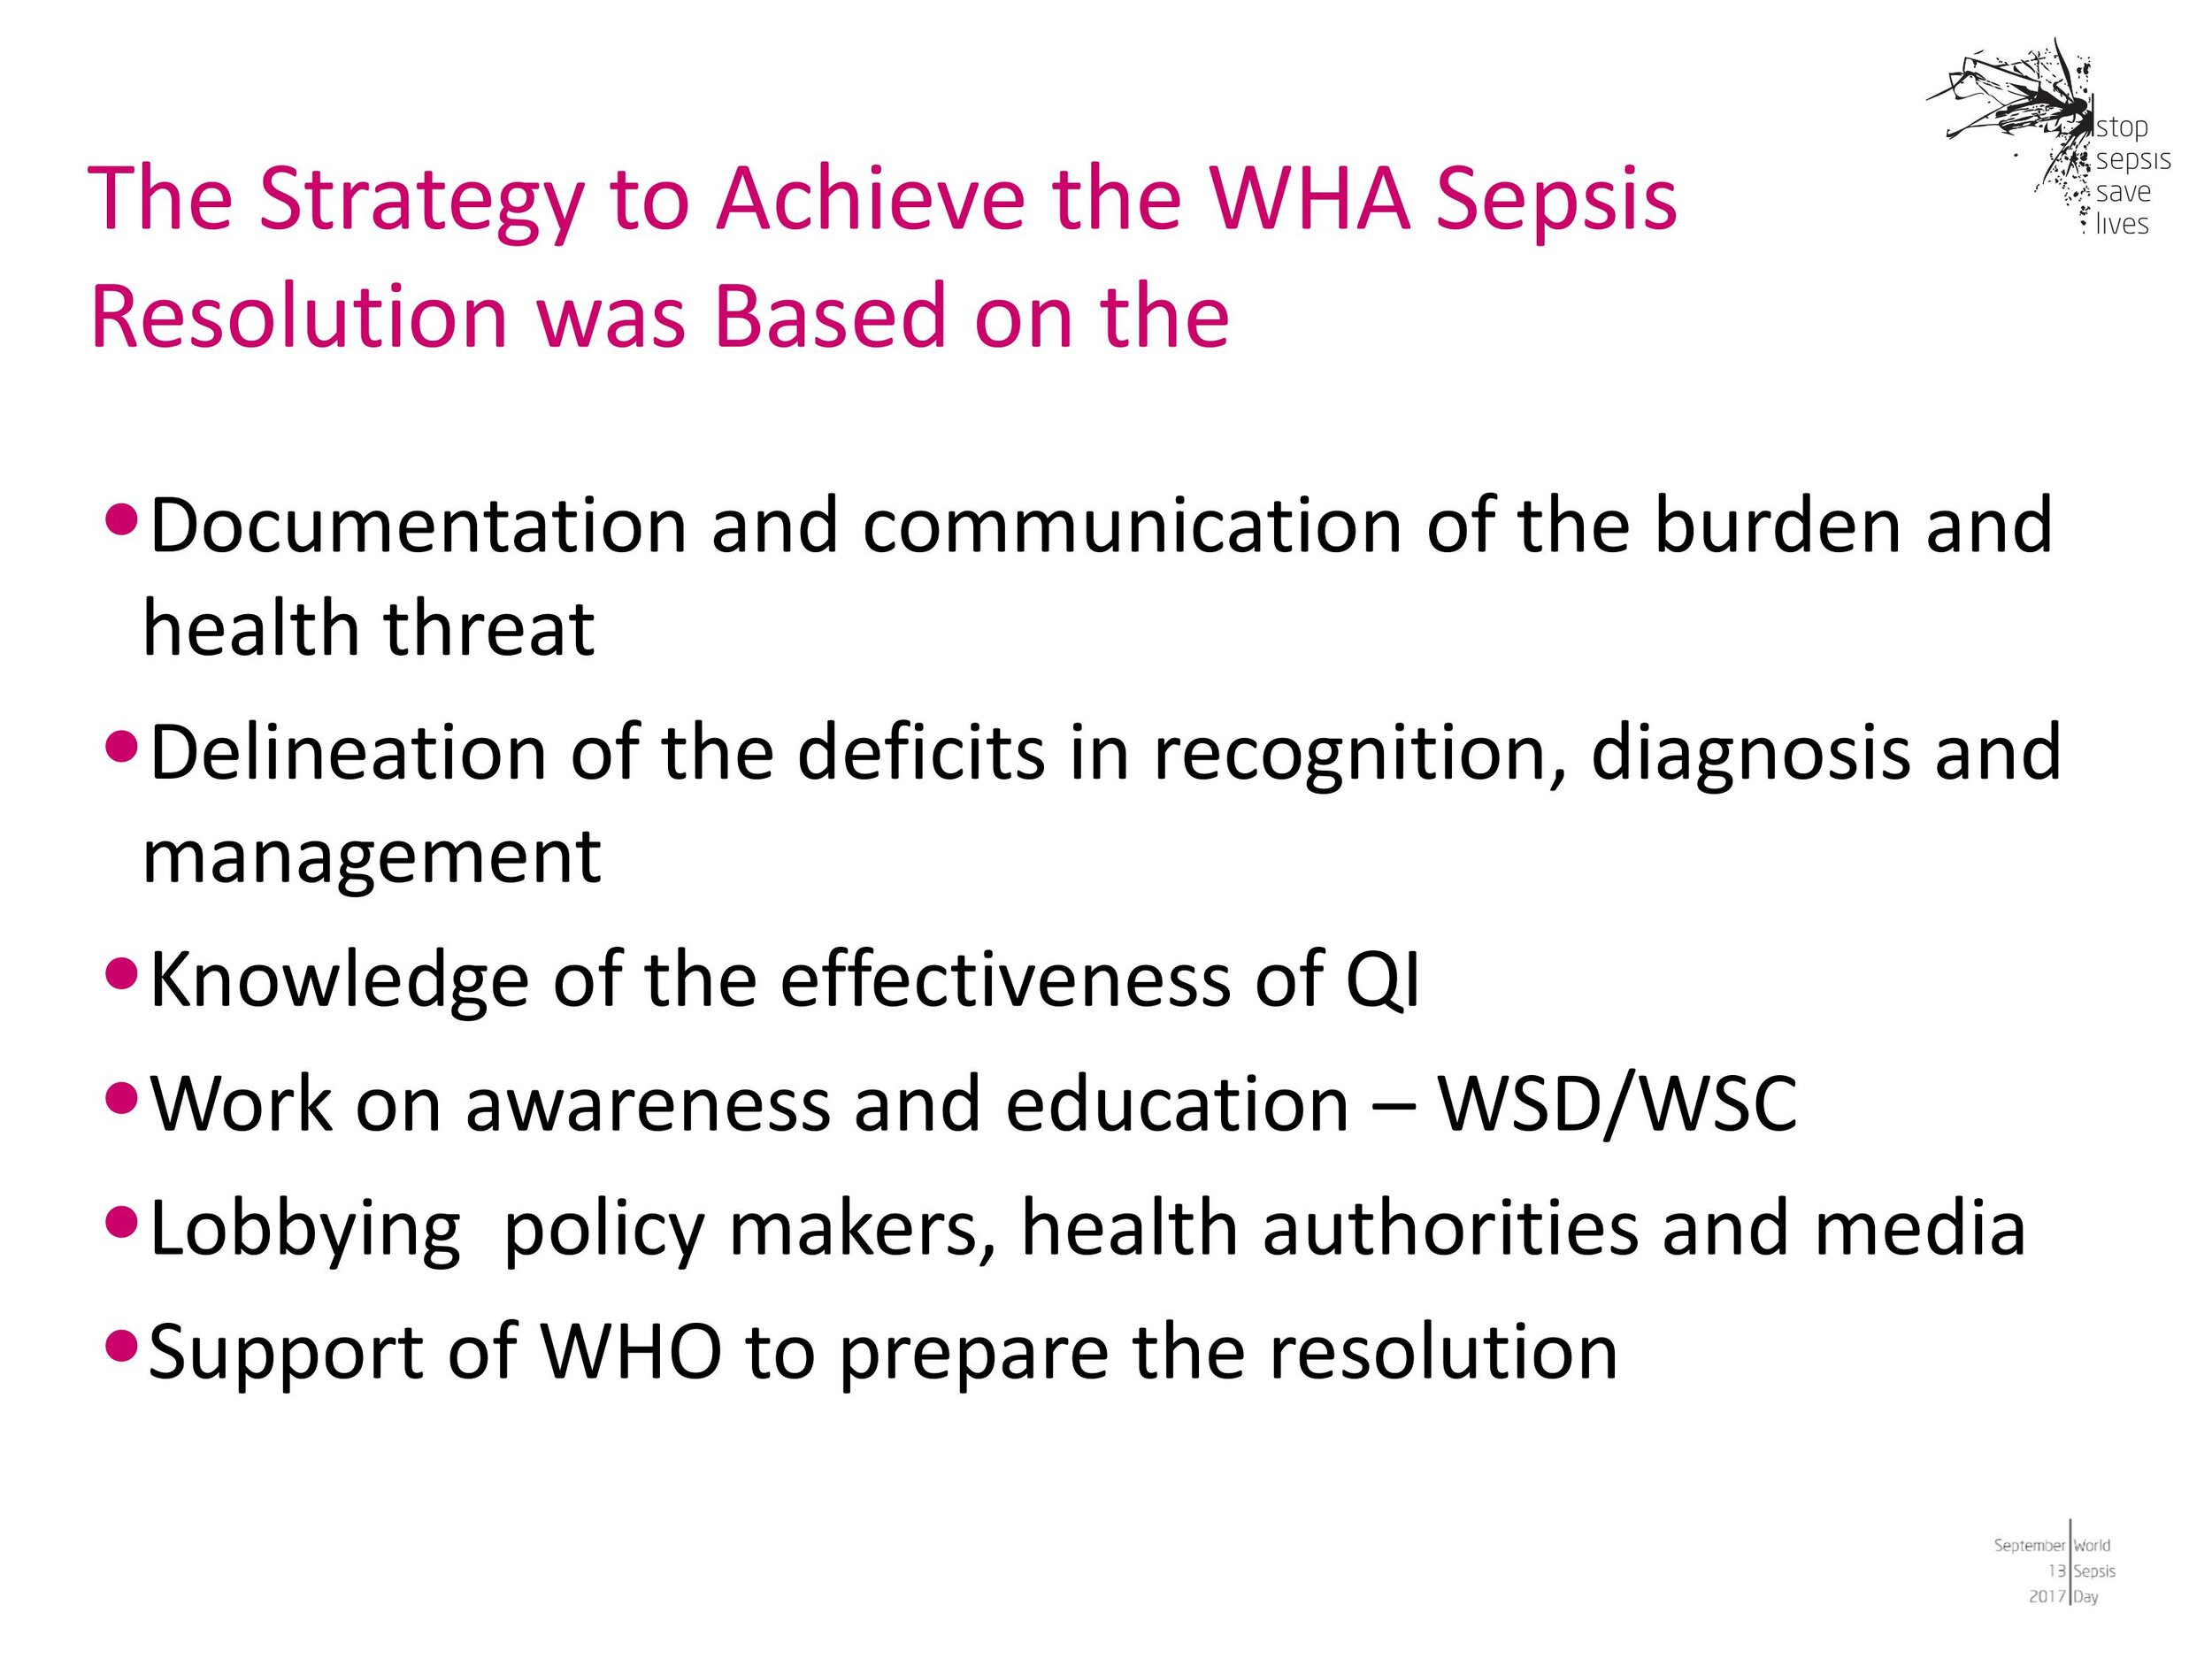 GSA Strategy and Achievements WCICCM 2019_2.jpg